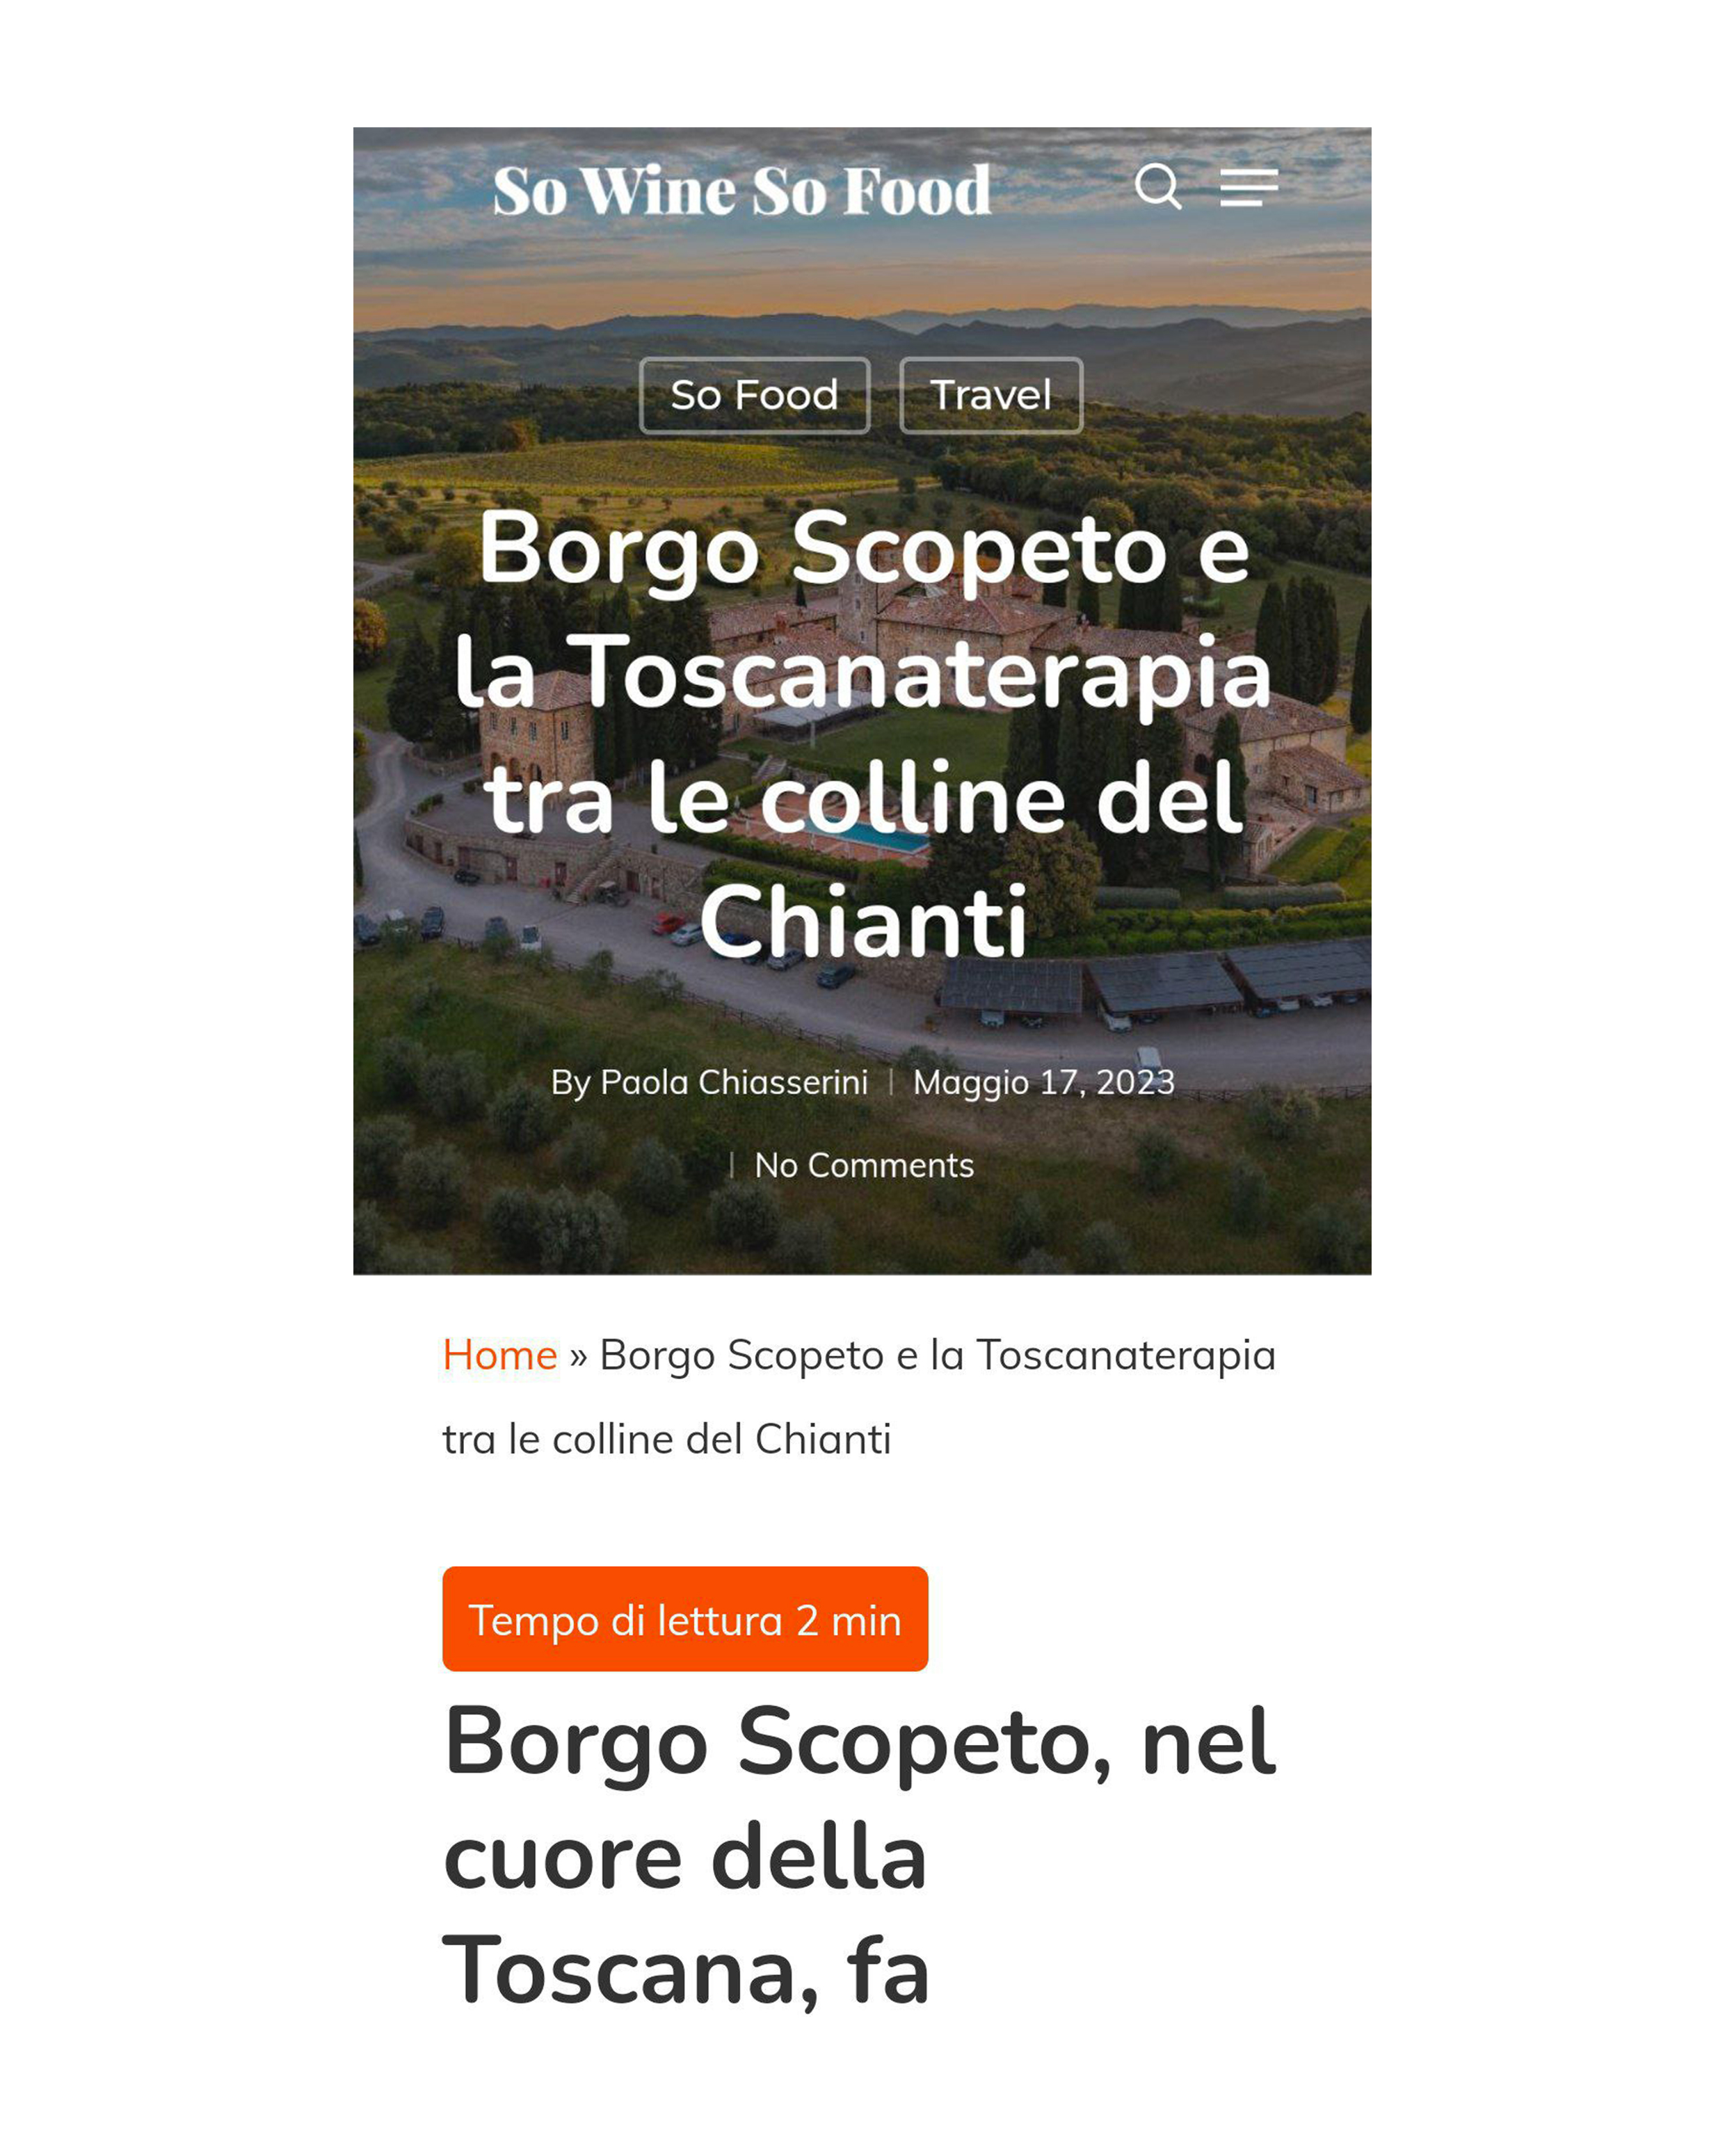 Borgo scopeto wine - monte - communication agency Milan